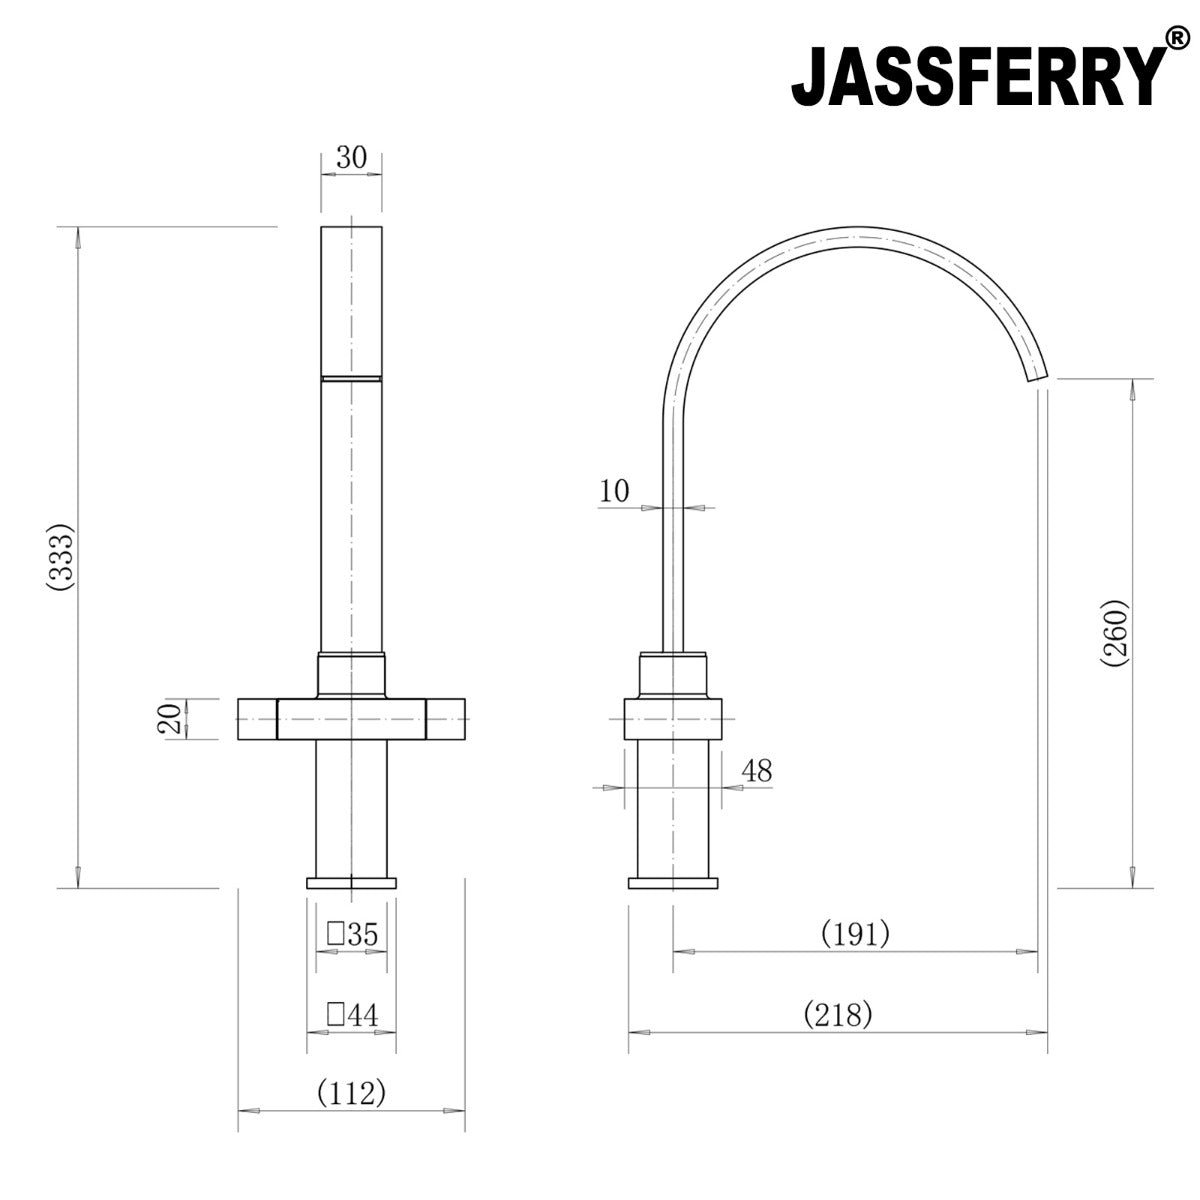 JassferryJASSFERRY Kitchen Sink Mixer Taps Dual Cuboid Design Lever Swivel Spout ChromeKitchen taps